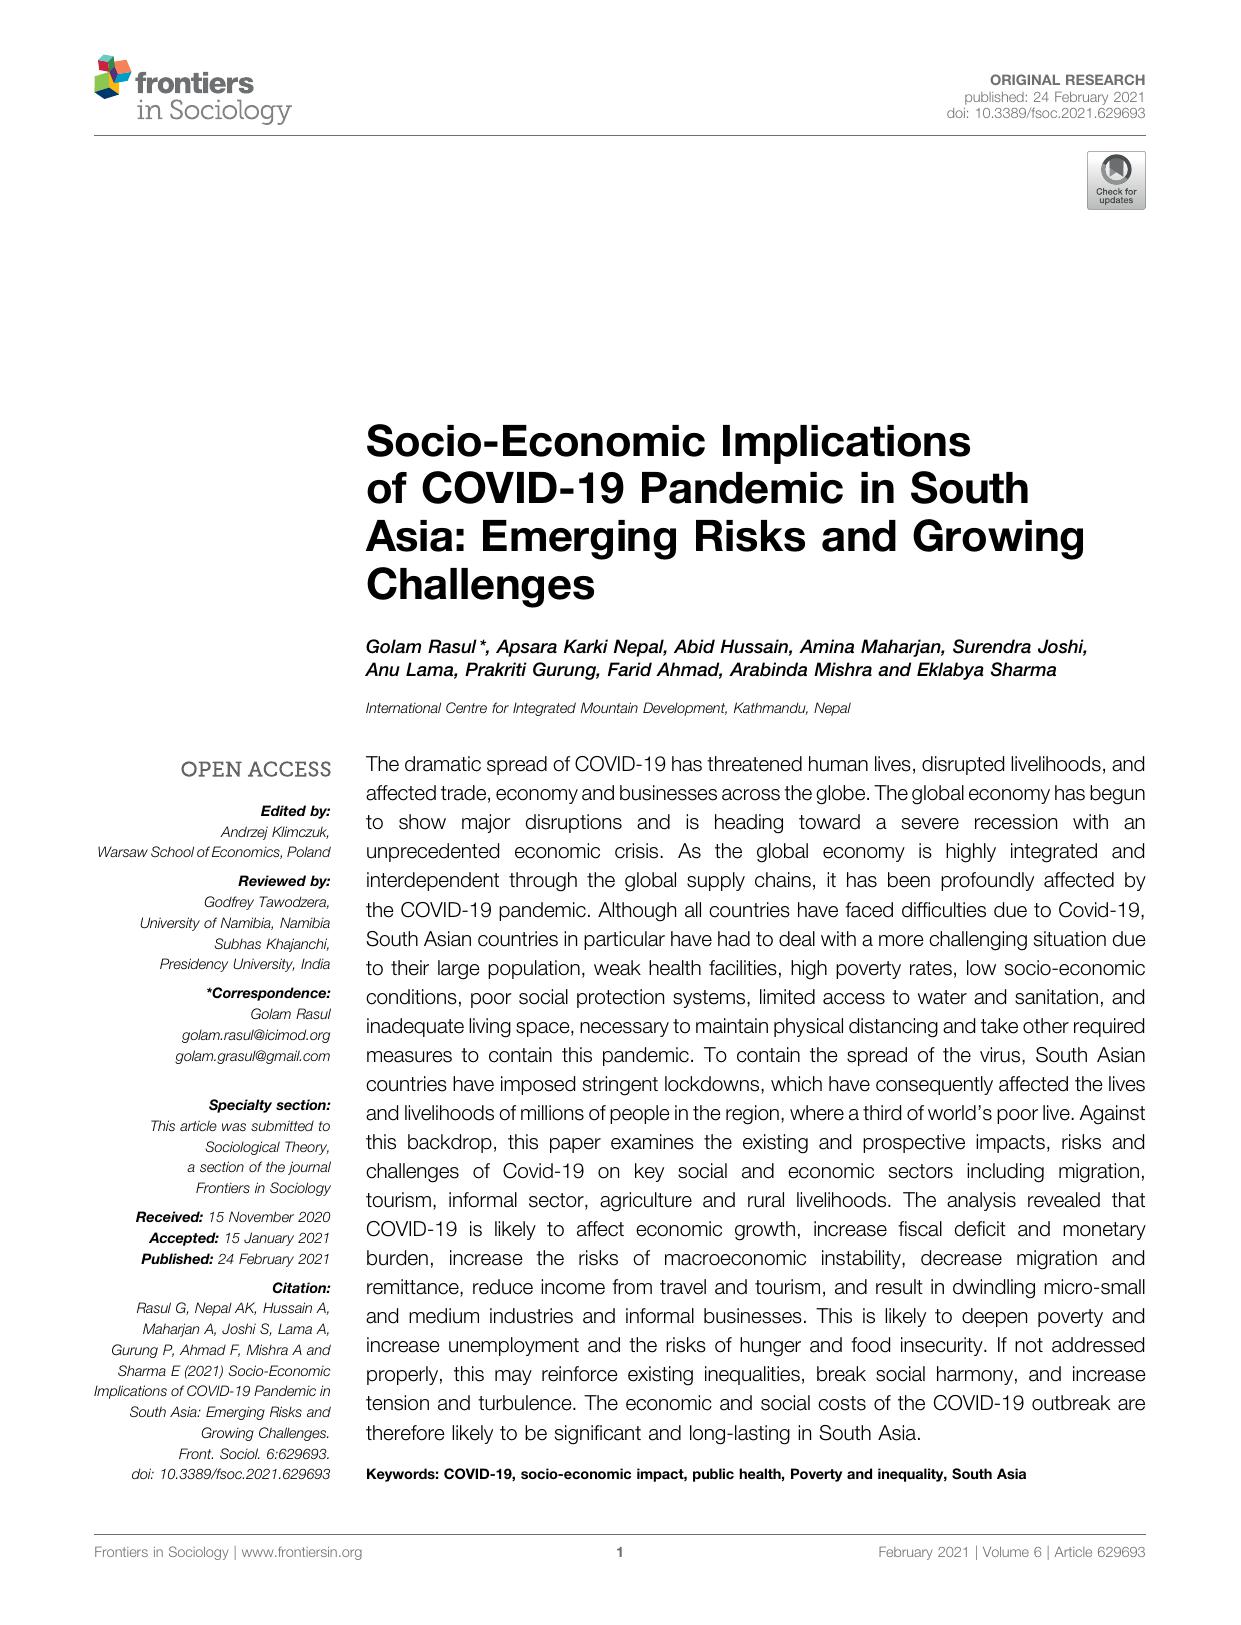 ocio-economic implications of COVID-19